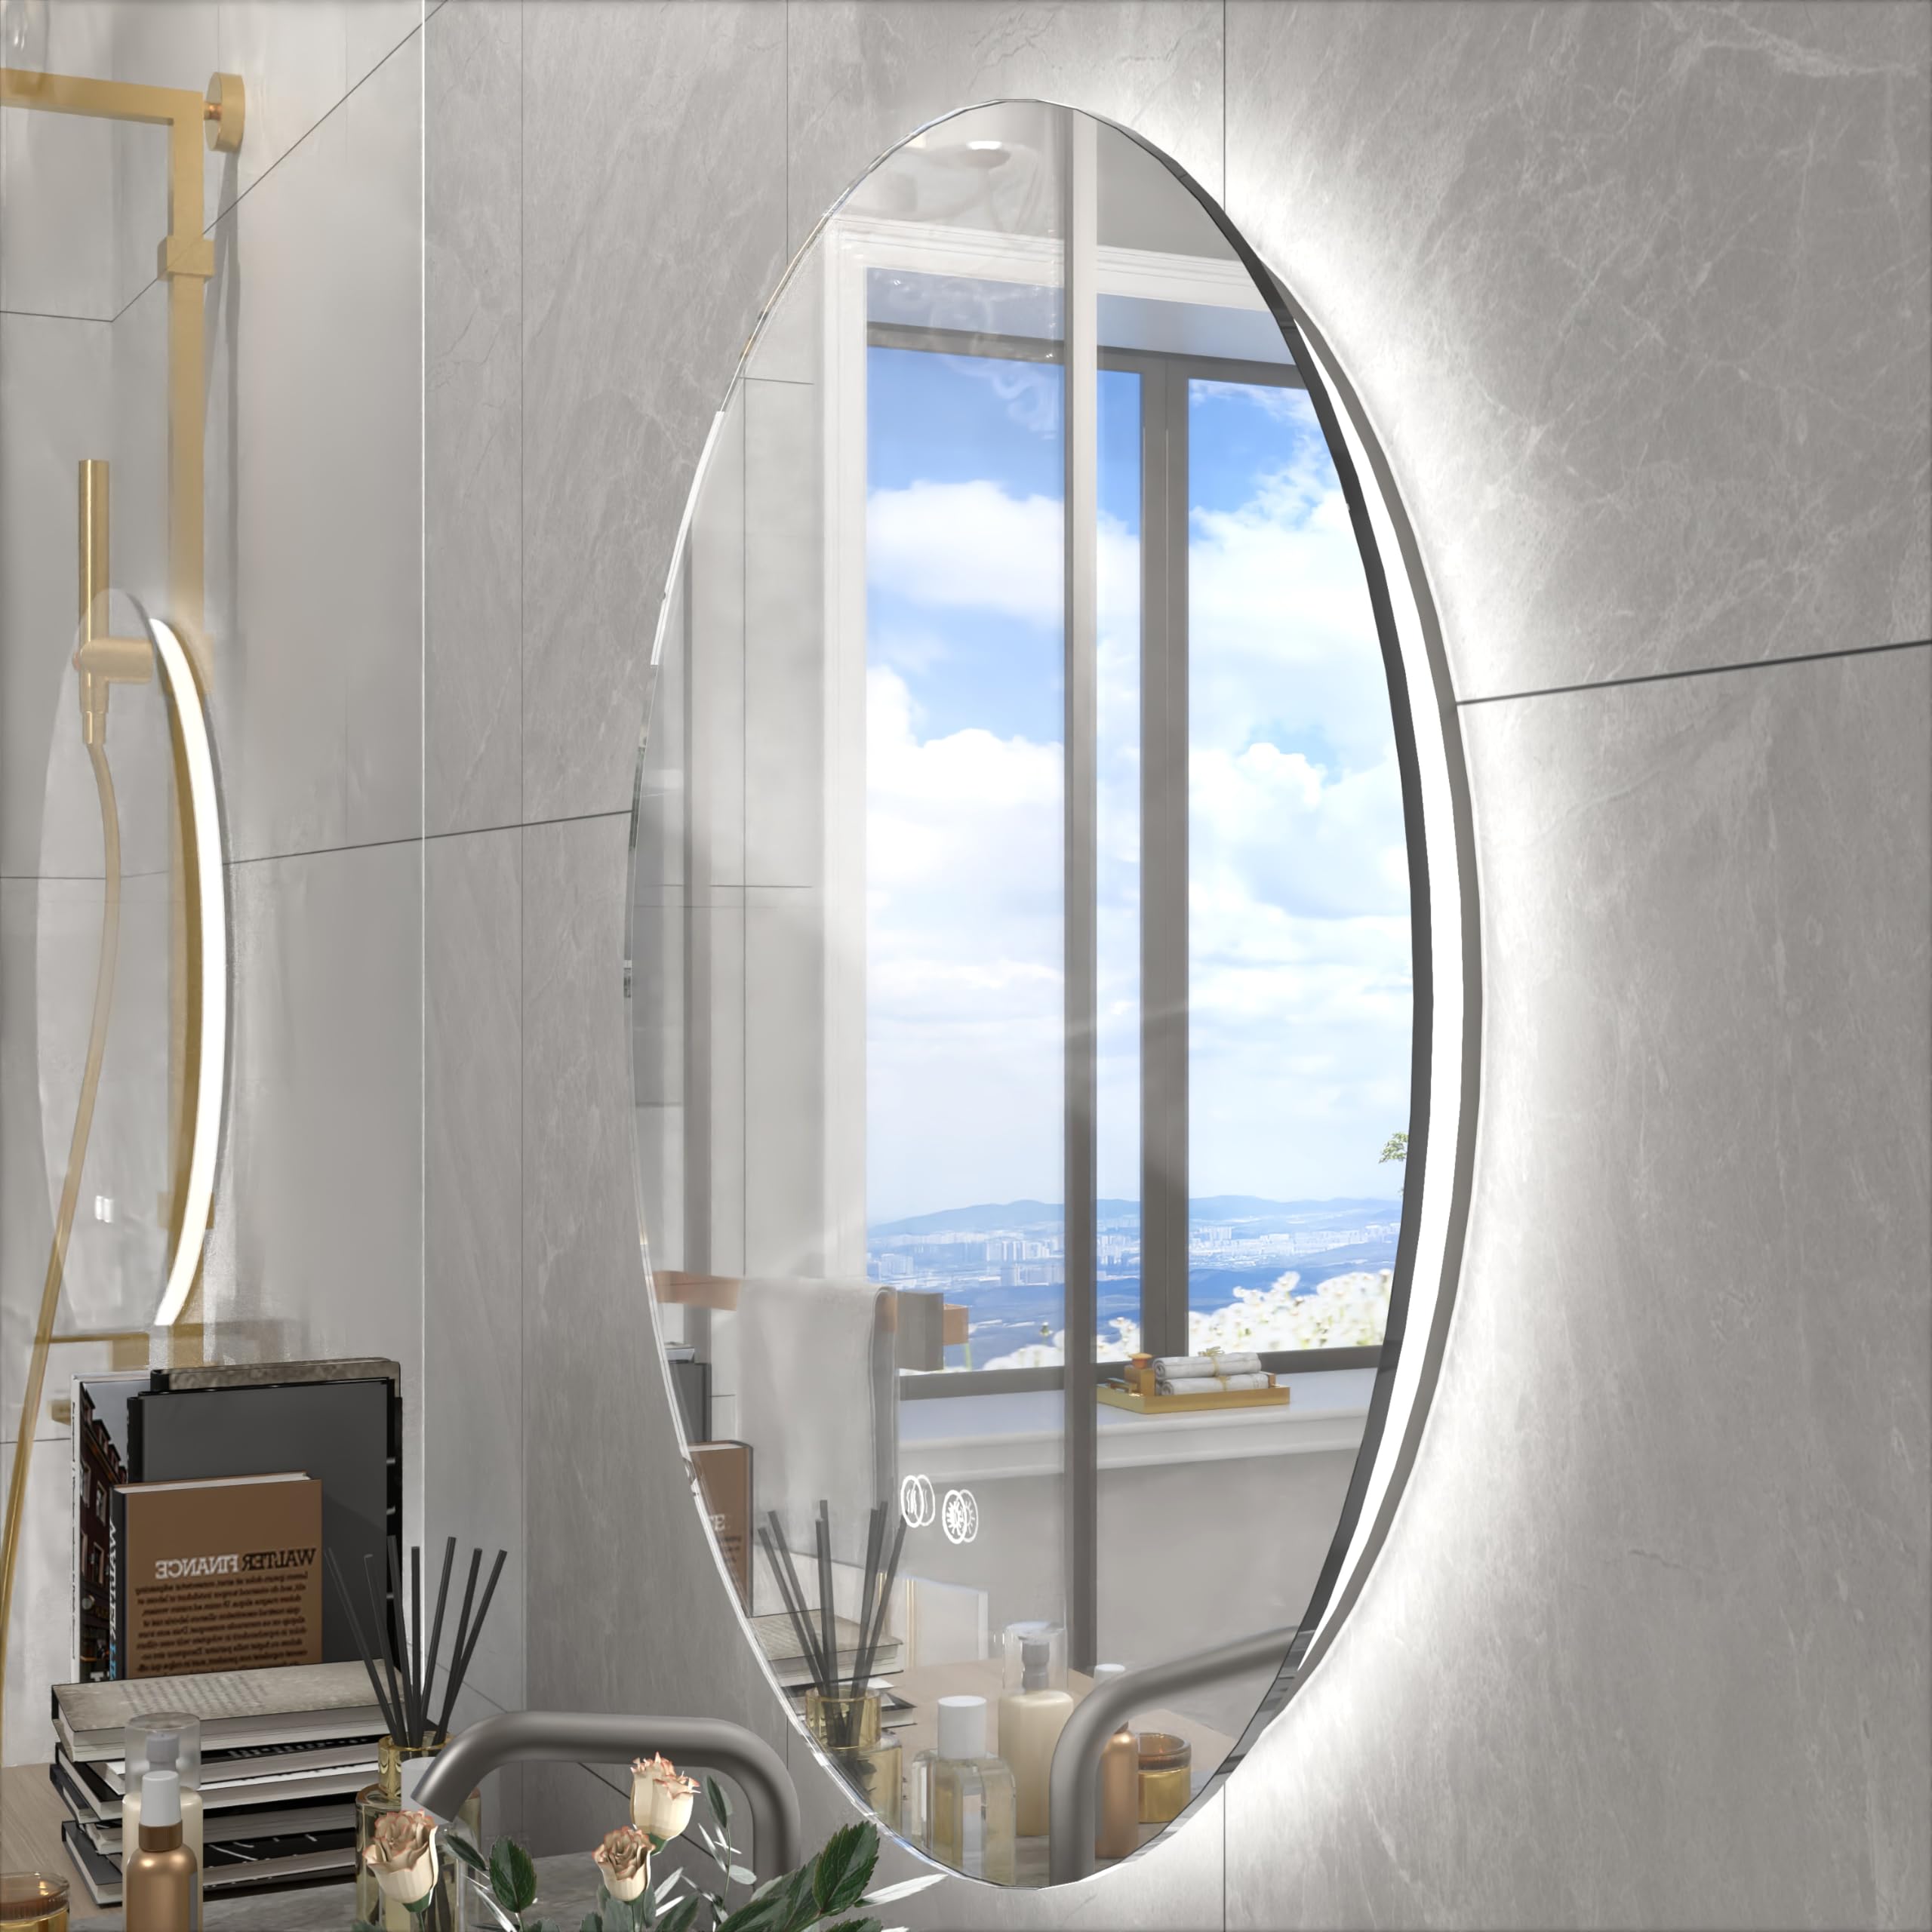 JSneijder 2-Piece LED Bathroom Mirror 24 Inch Backlit Round Mirror & 28x36 Inch Rectangular Black Mirror, Wall Mounted Dimmable Anti-Fog